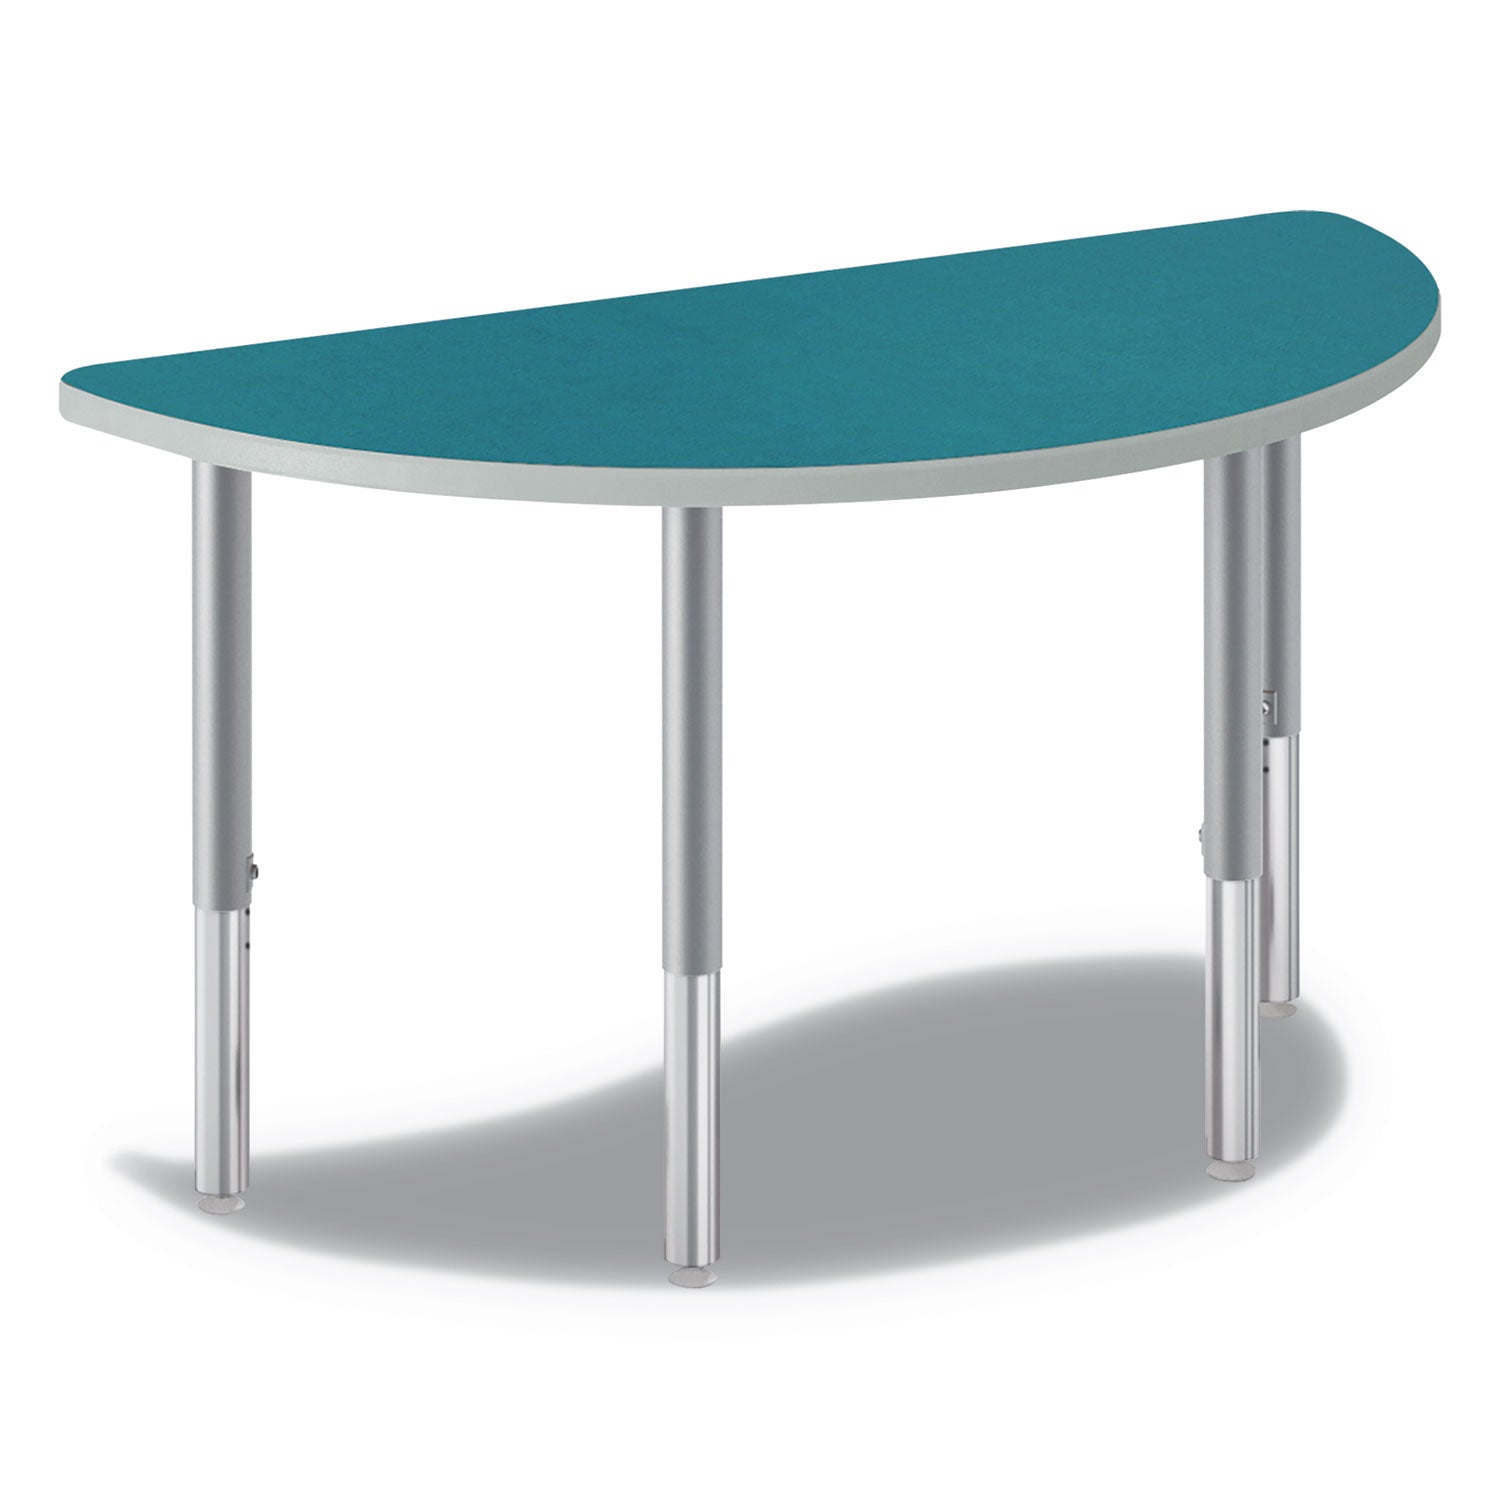 build-half-round-shape-table-top-60w-x-30d-blue-agave_honsh3060enba1k - 2